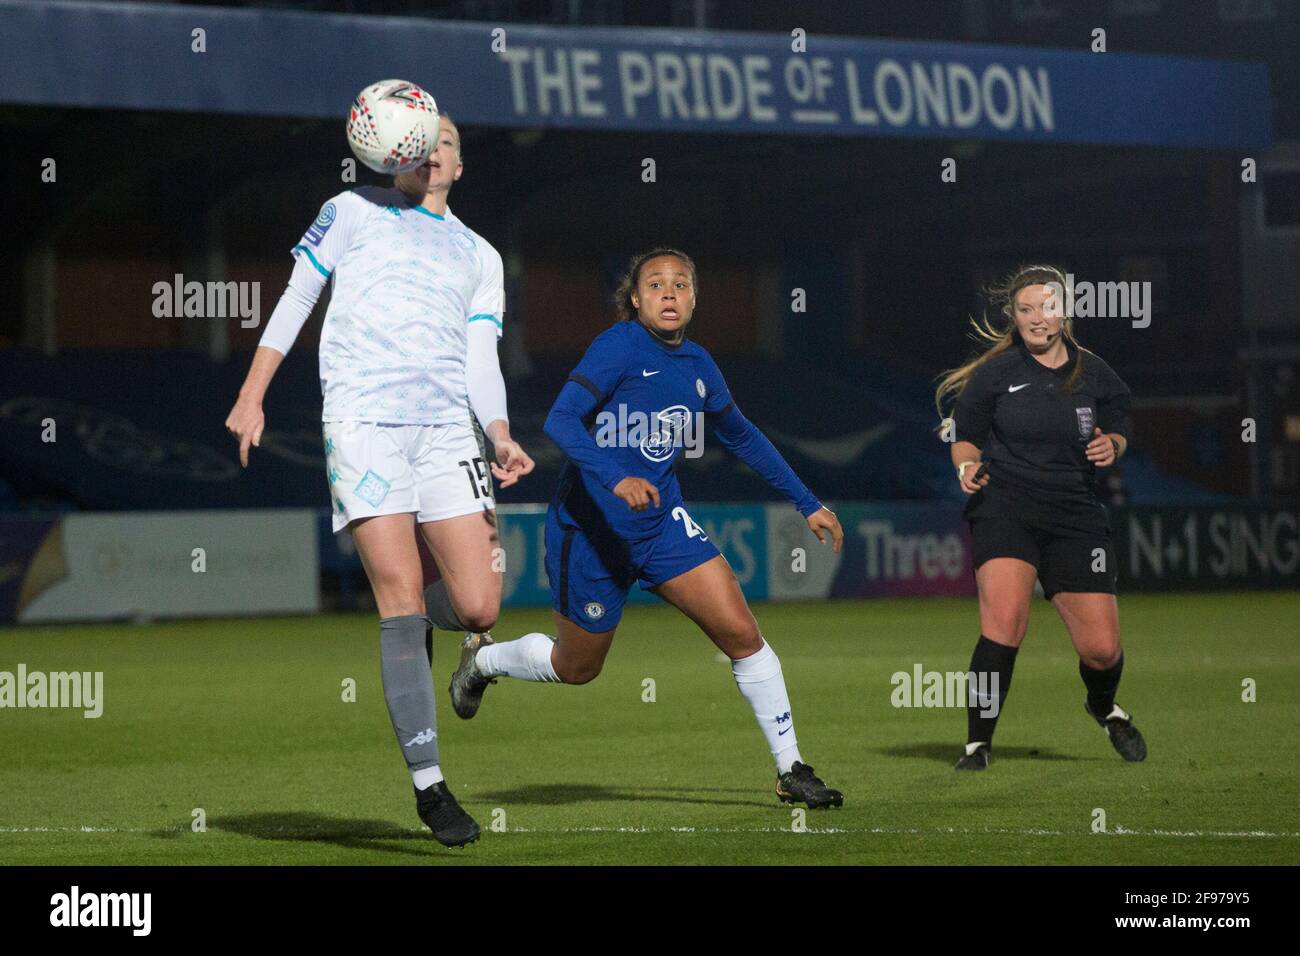 LONDON, GROSSBRITANNIEN. 16. APRIL: London City kontrolliert den Ball während des FA Women’s Cup 2020-21 zwischen dem FC Chelsea und London City auf Kingsmeadow. Stockfoto